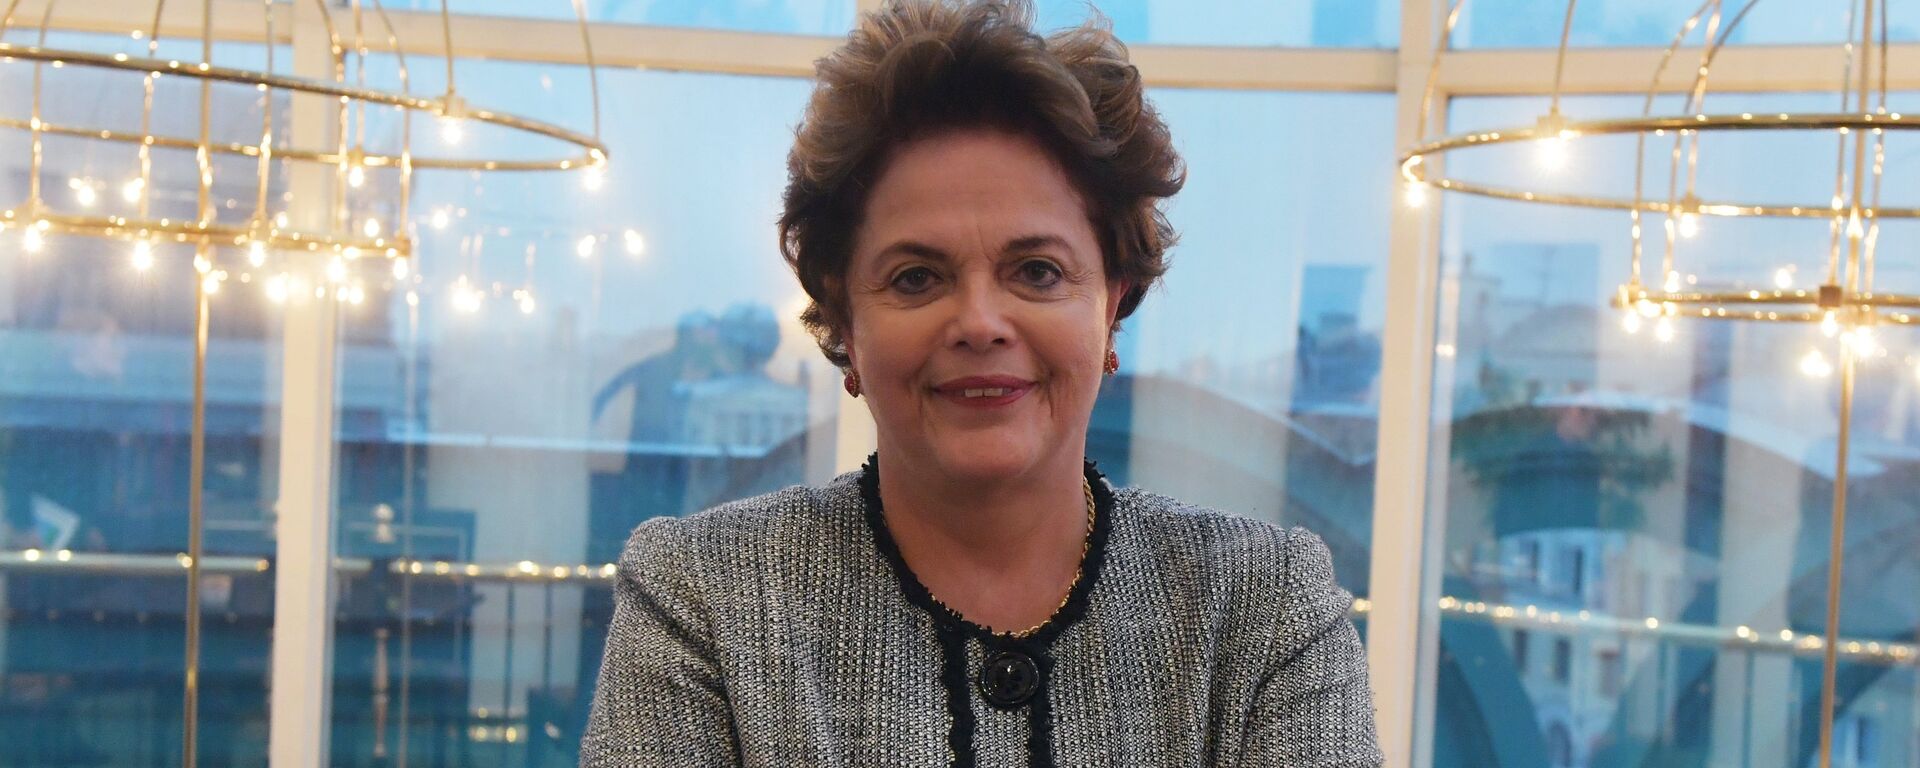 La exmandataria brasileña Dilma Rousseff - Sputnik Mundo, 1920, 17.06.2021